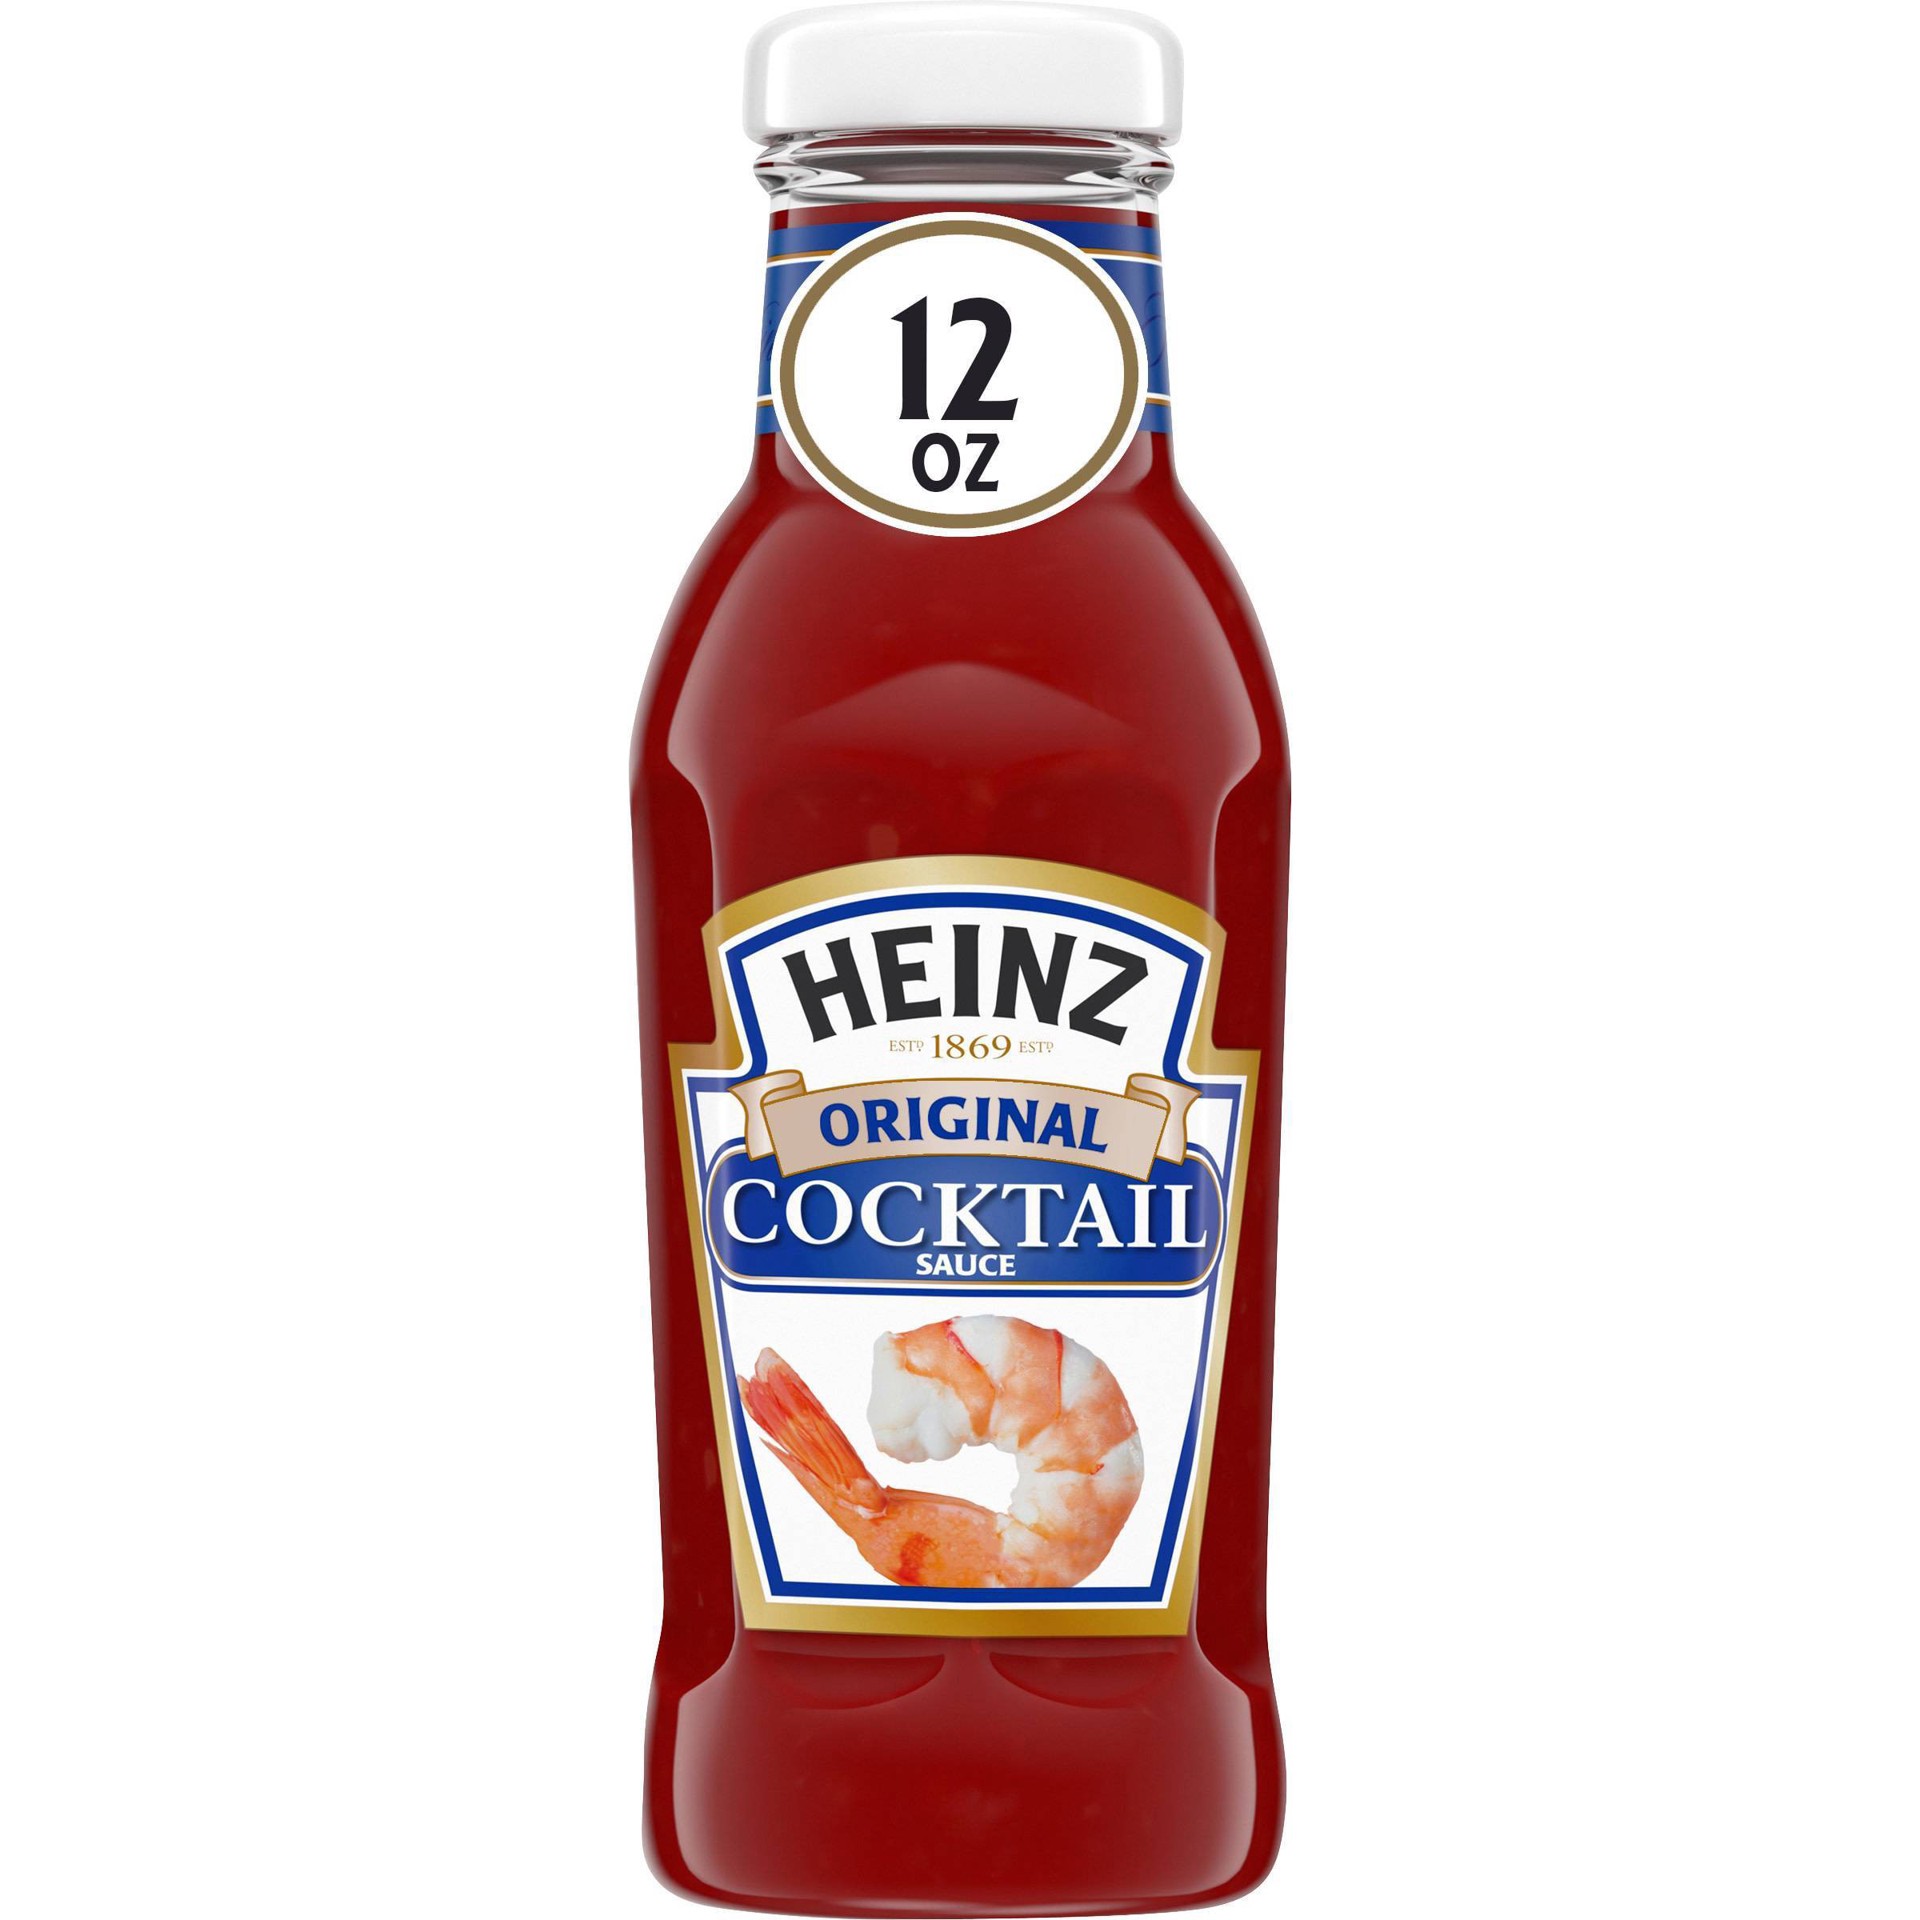 slide 1 of 153, Heinz Original Cocktail Sauce, 12 oz